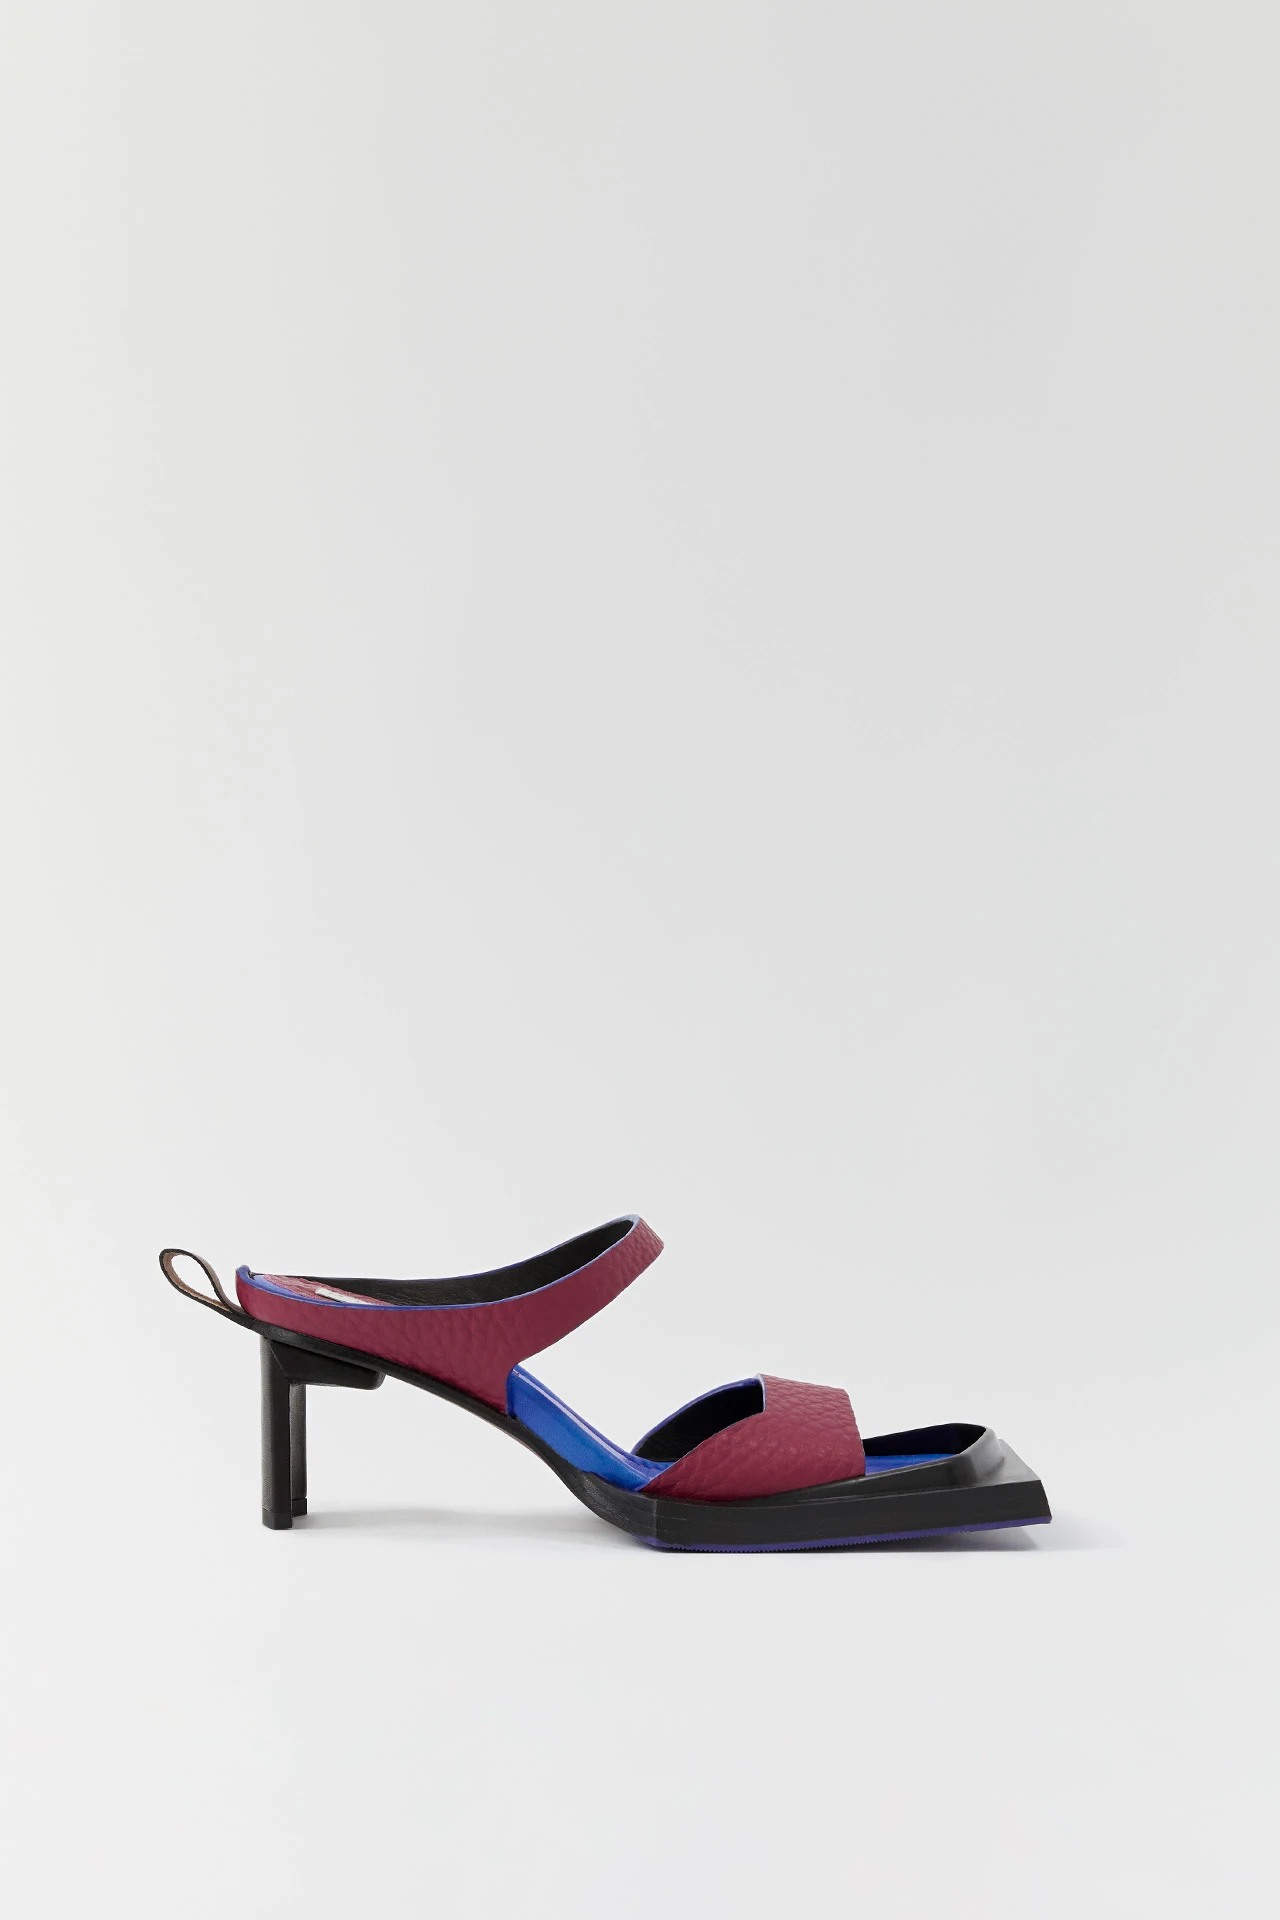 Miista-ren-burgundy-sandals-01